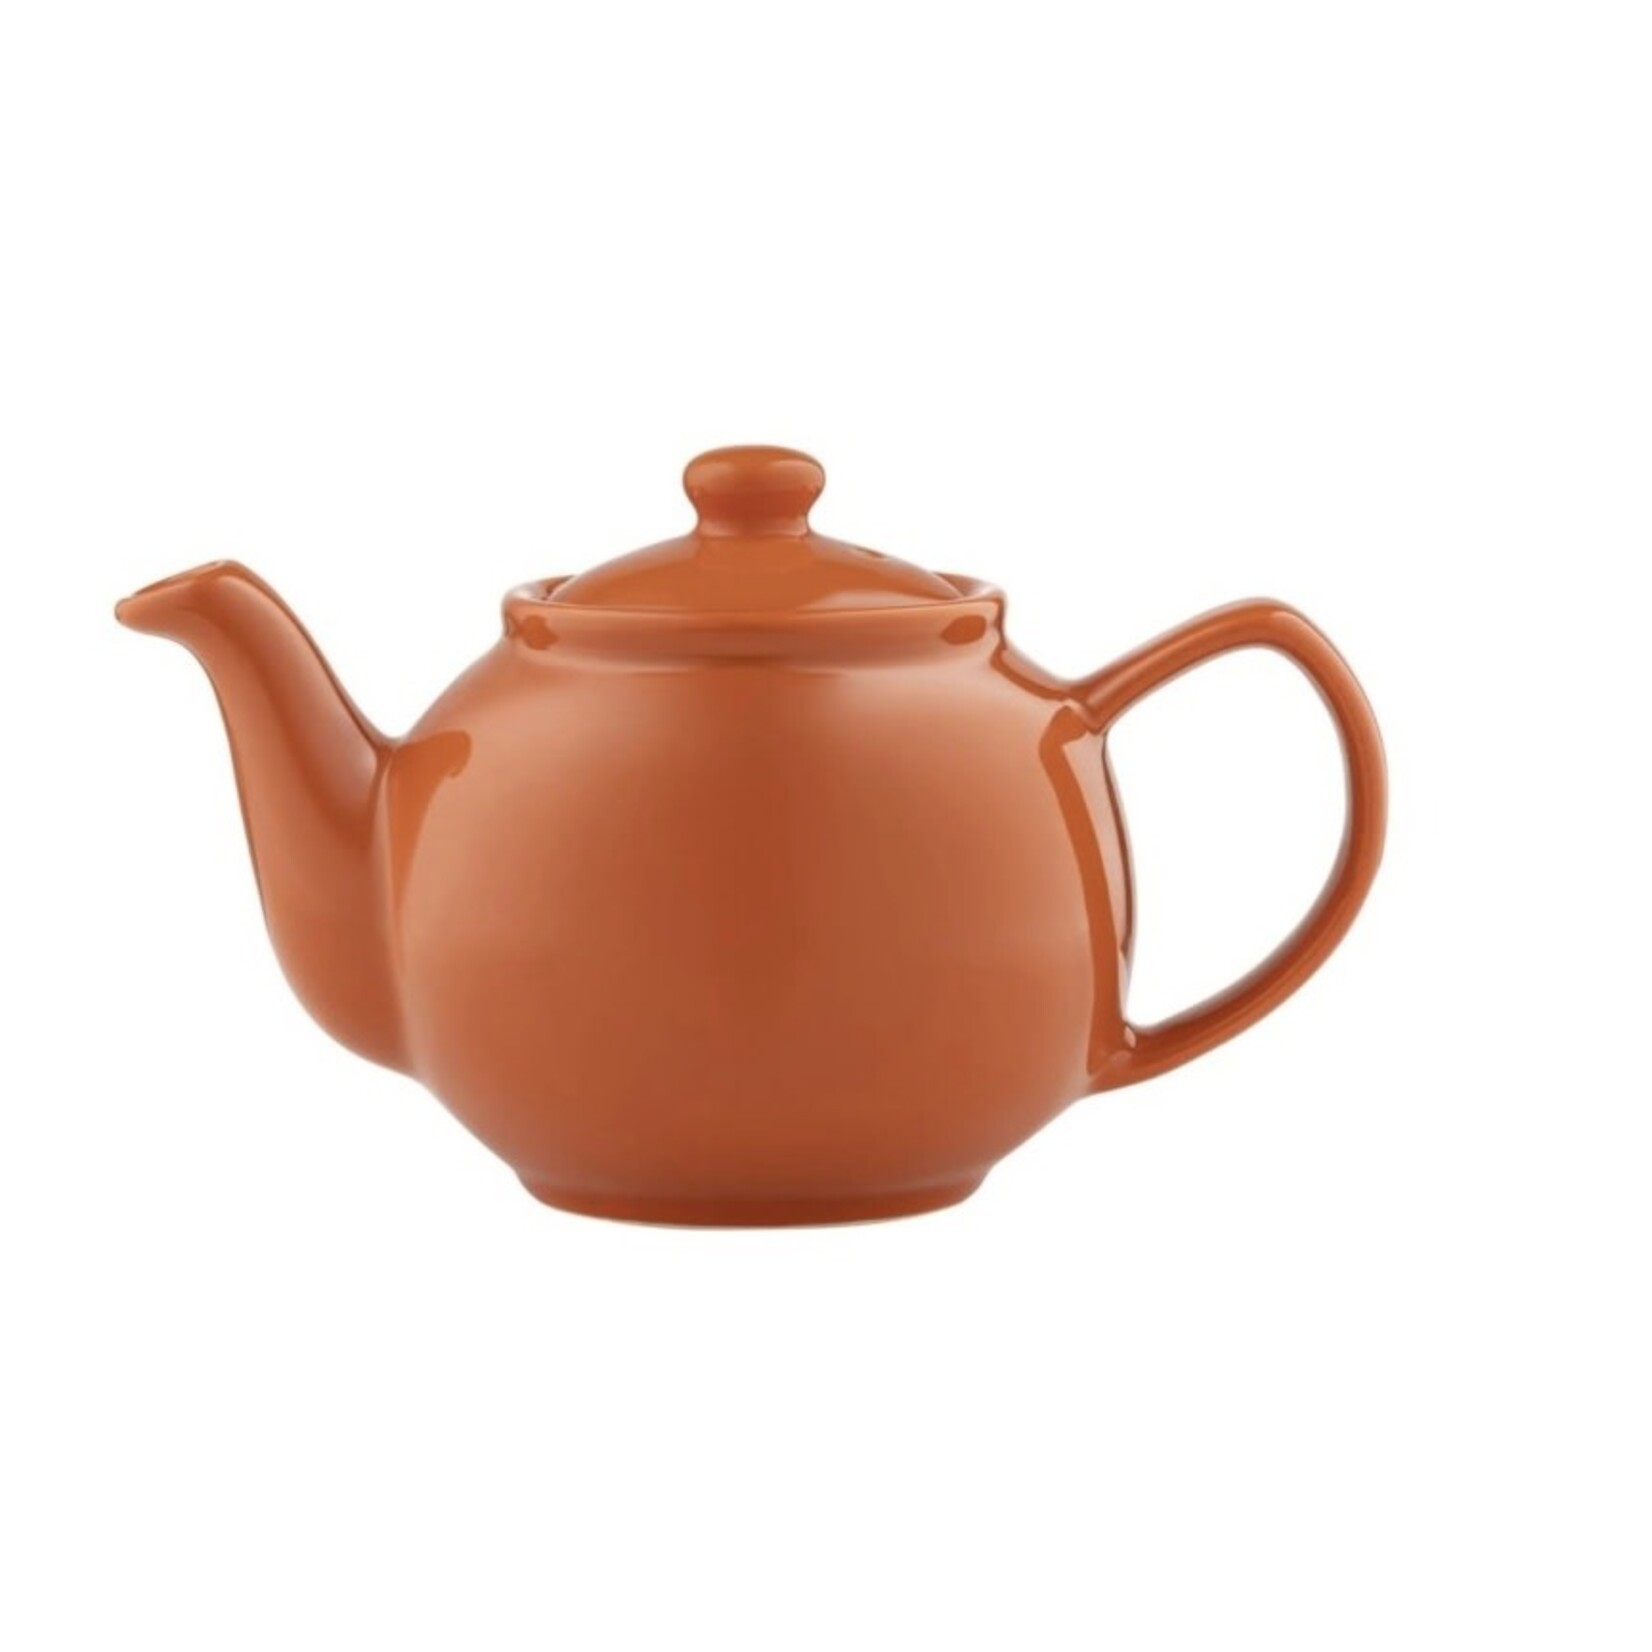 PRICE & KENSINGTON PRICE & KENSINGTON Brights Teapot 6 Cup Burnt-Orange